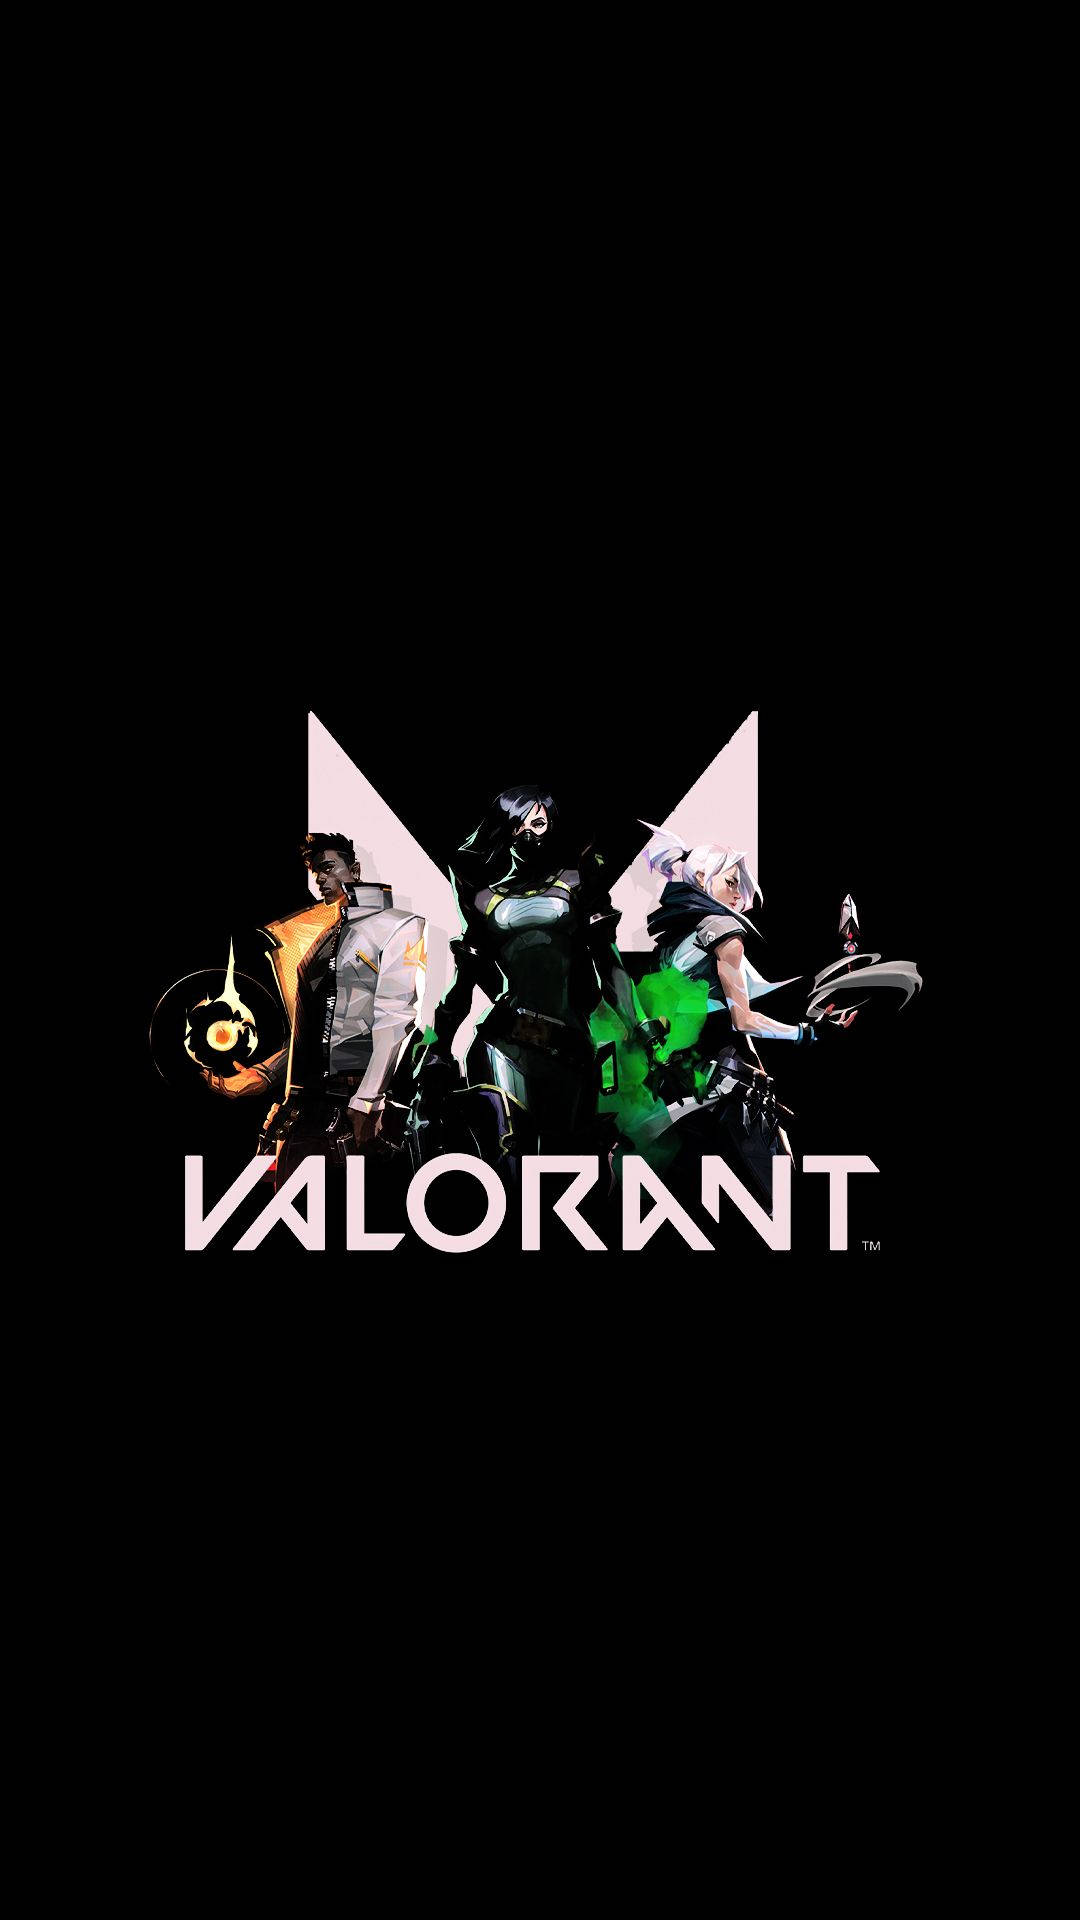 100+] Valorant 4k Backgrounds